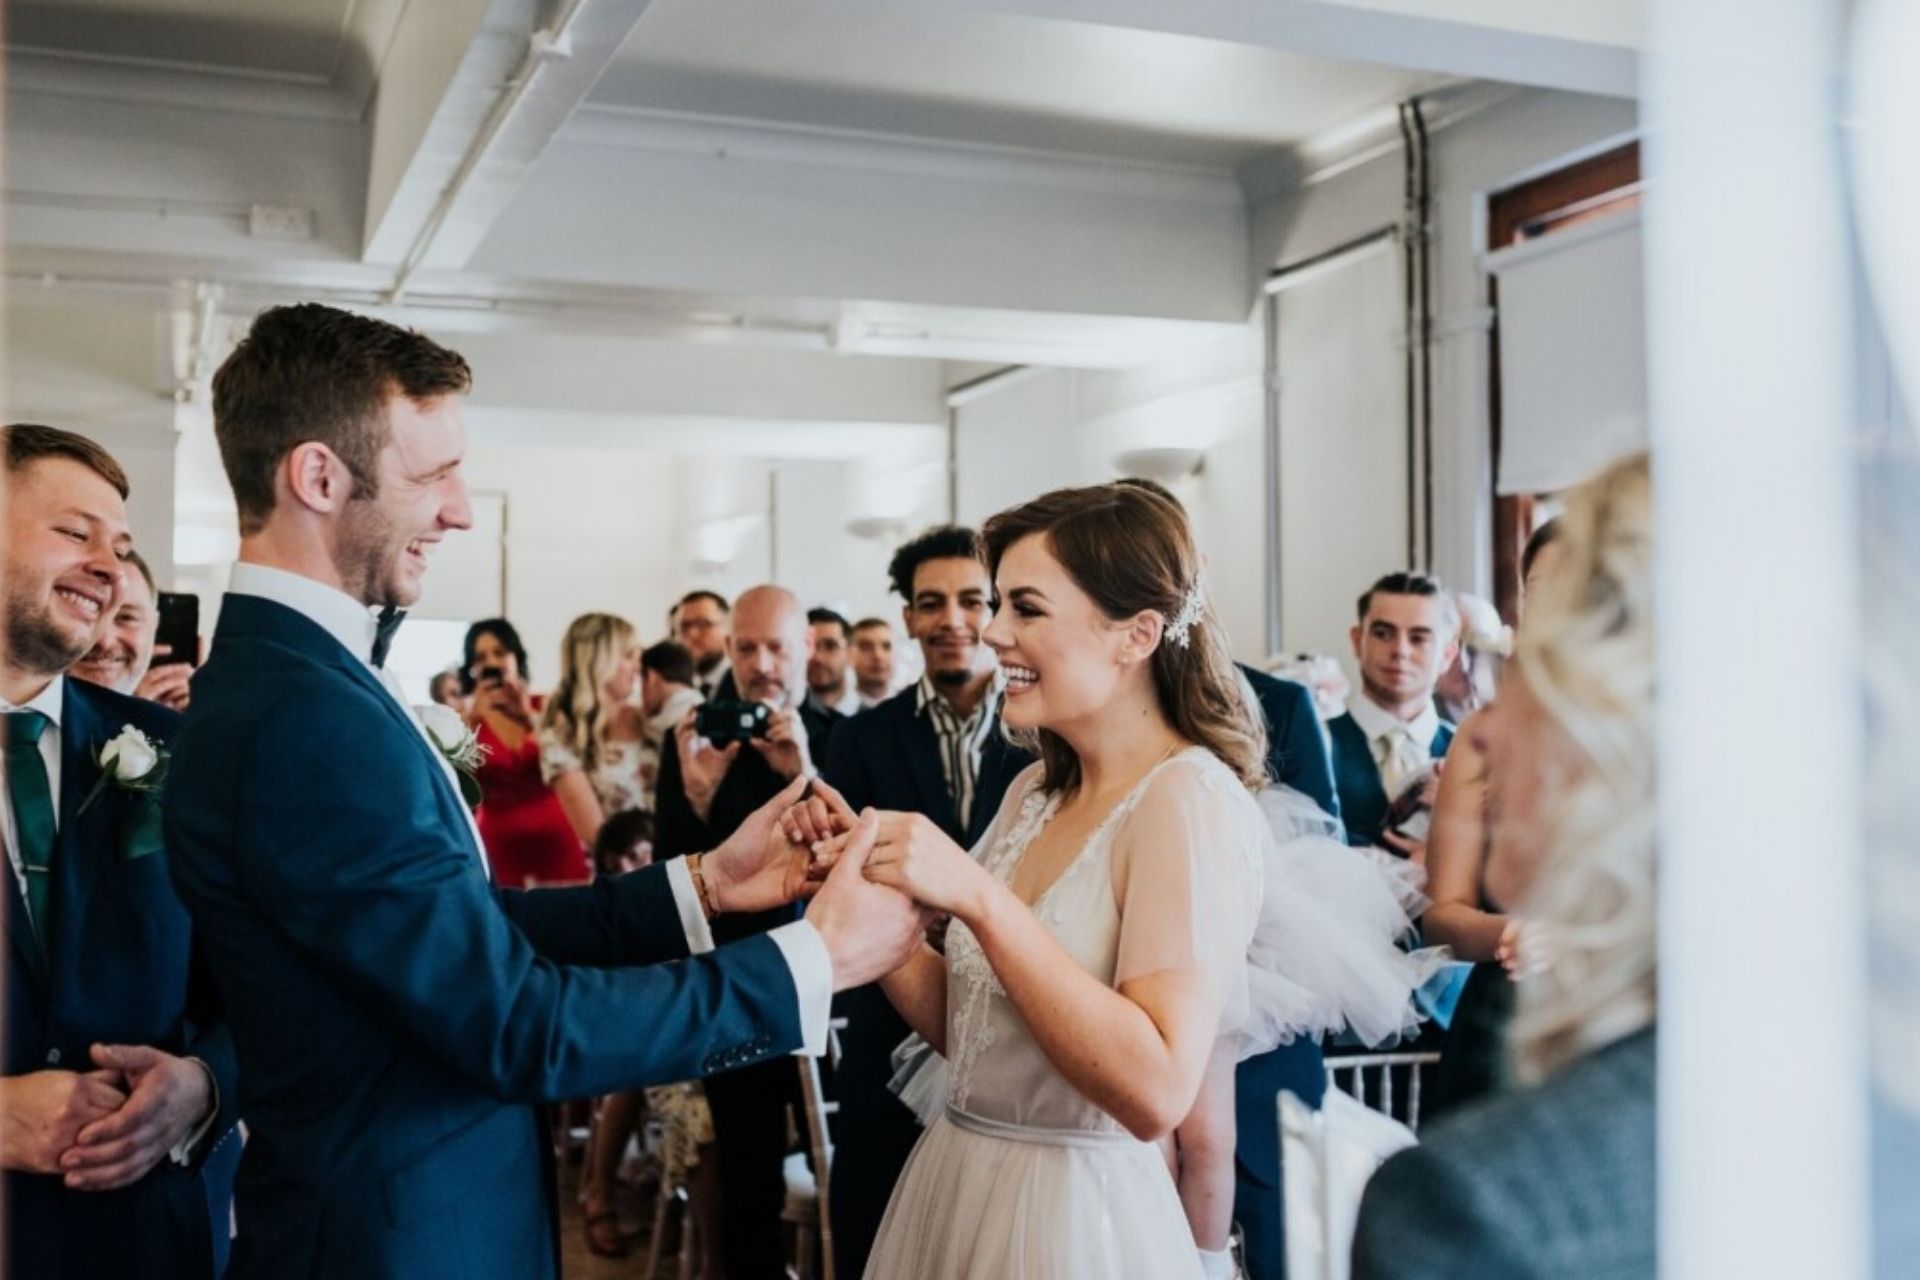 Perfect wedding ceremony checklist